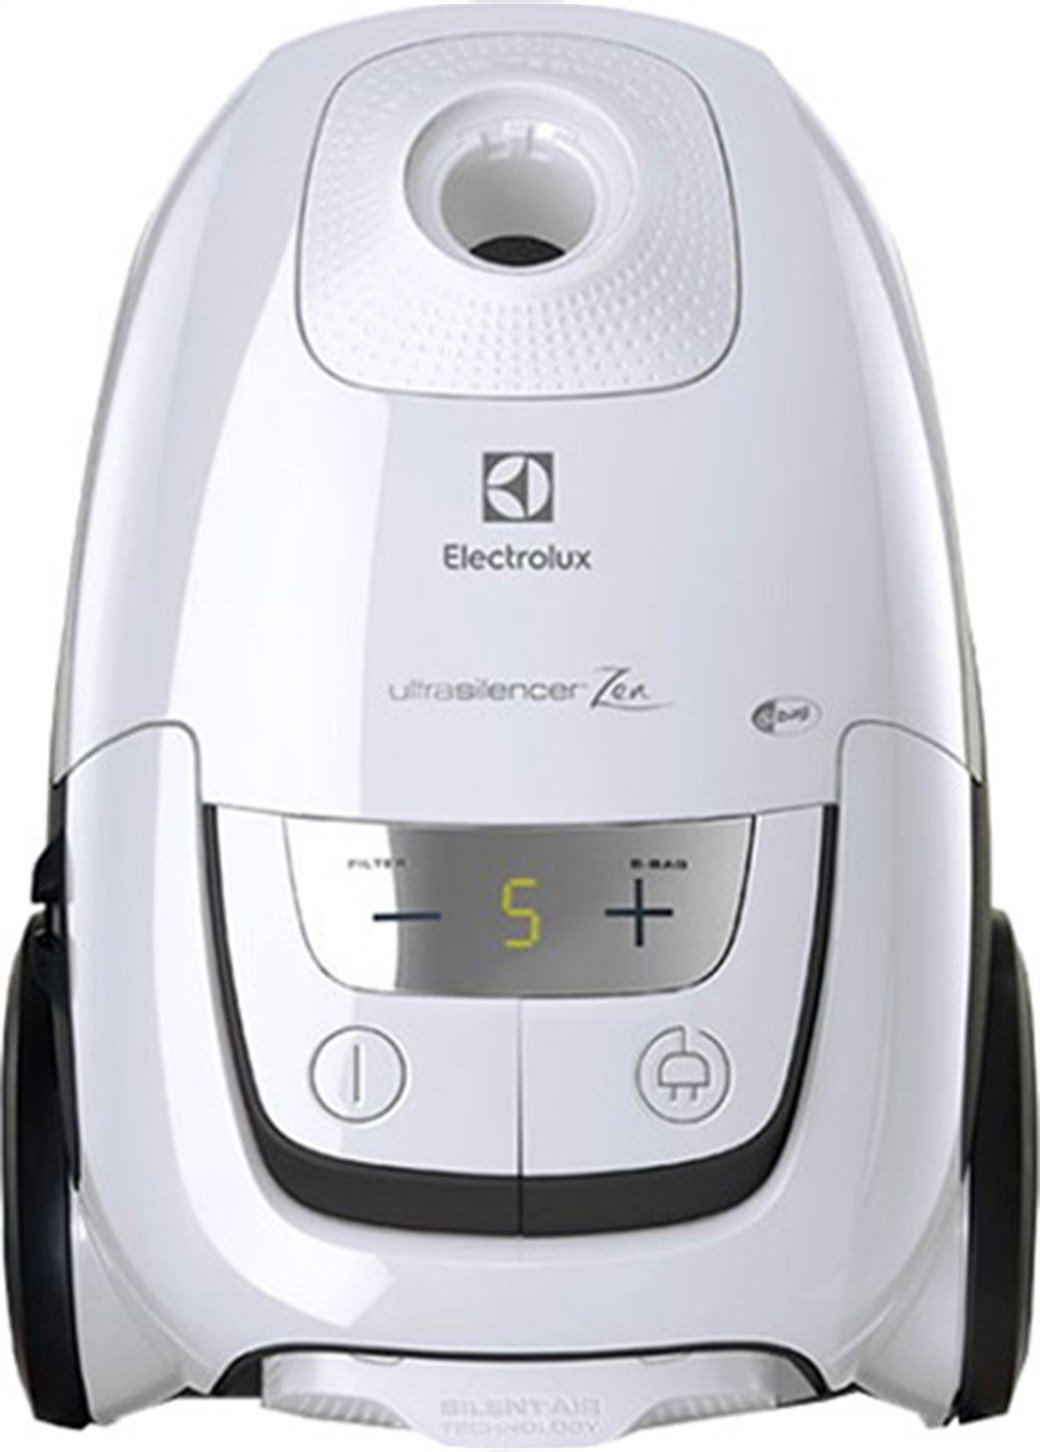 Electrolux UltraSilencer ZEN specifications